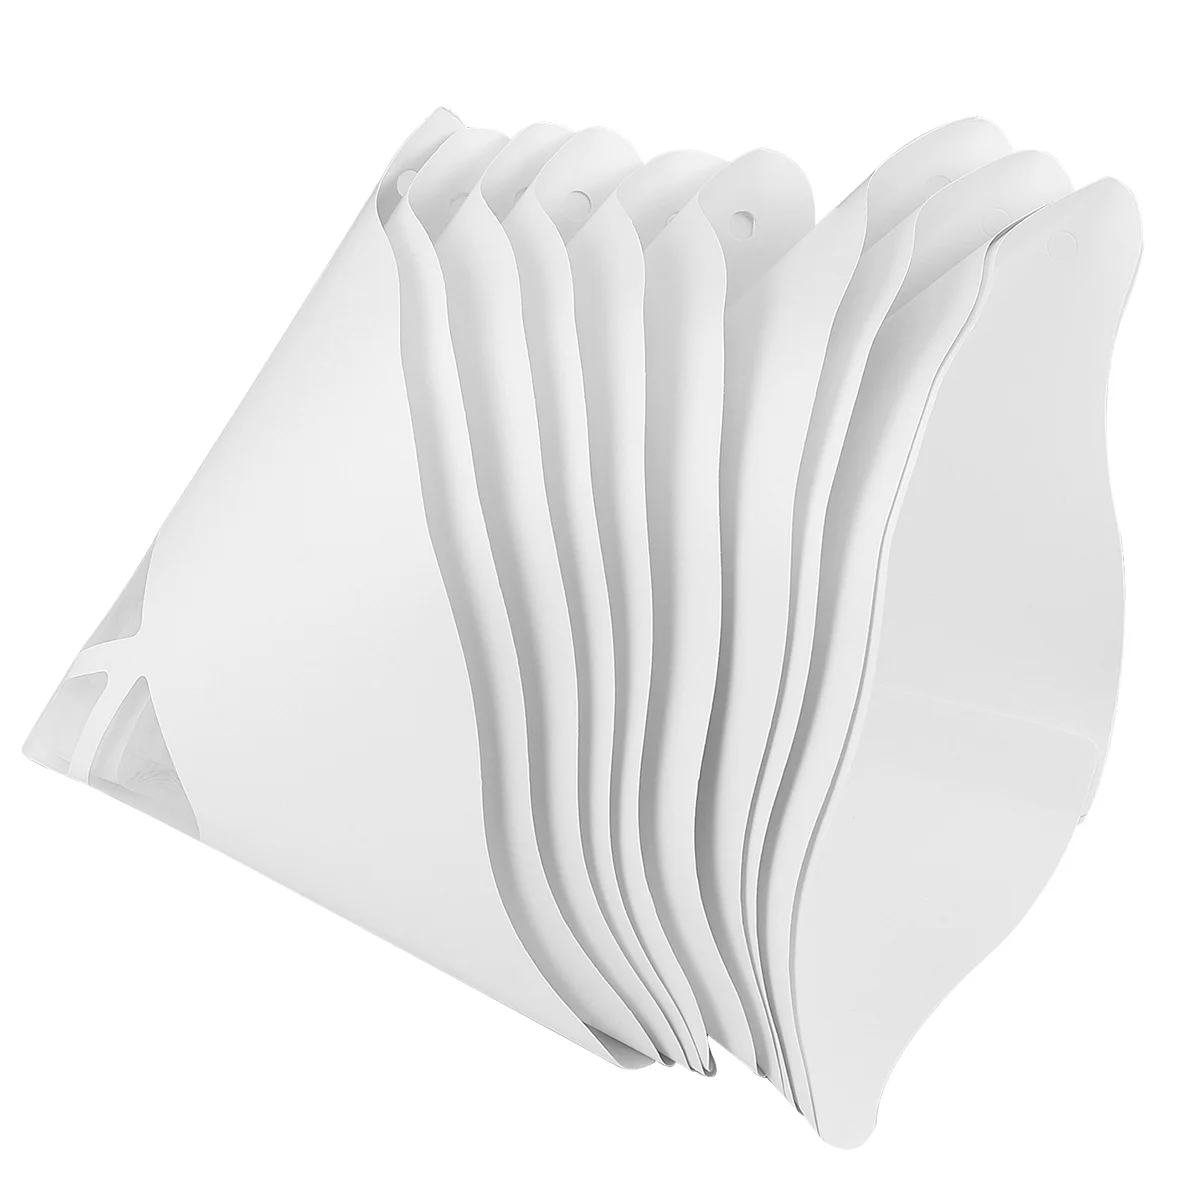 

UKCOCO 10PCS Disposable Paper Filament Filters 3D Printer Accessory for SLA Light Curing Filament (White)